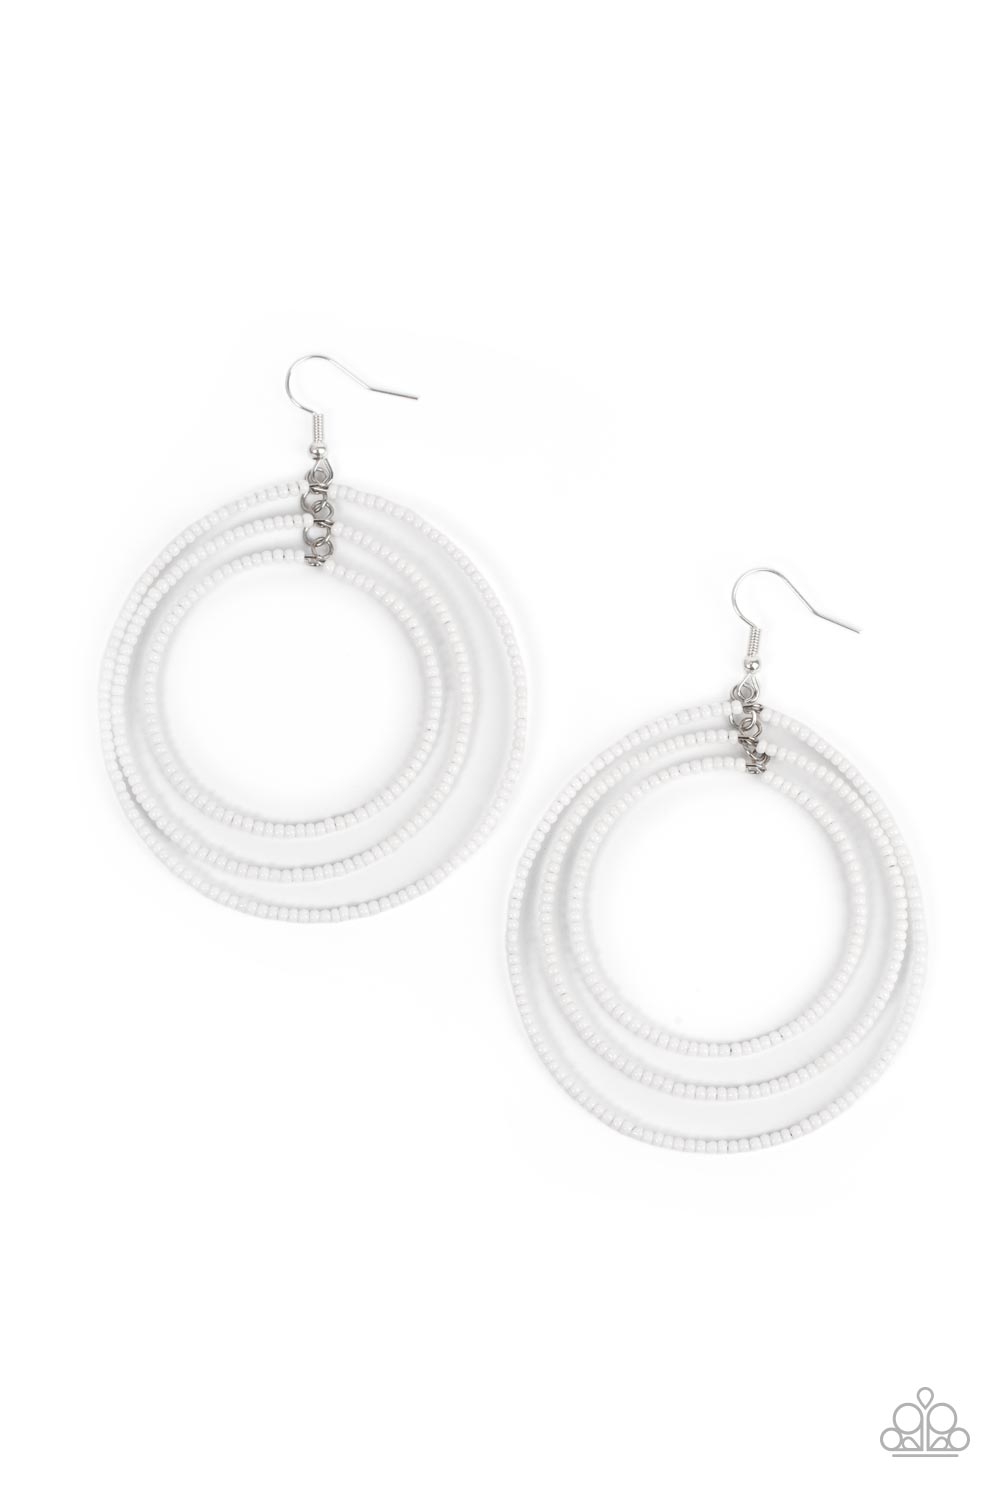 White Earrings - Paparazzi Colorfully Circulating Paparazzi jewelry image